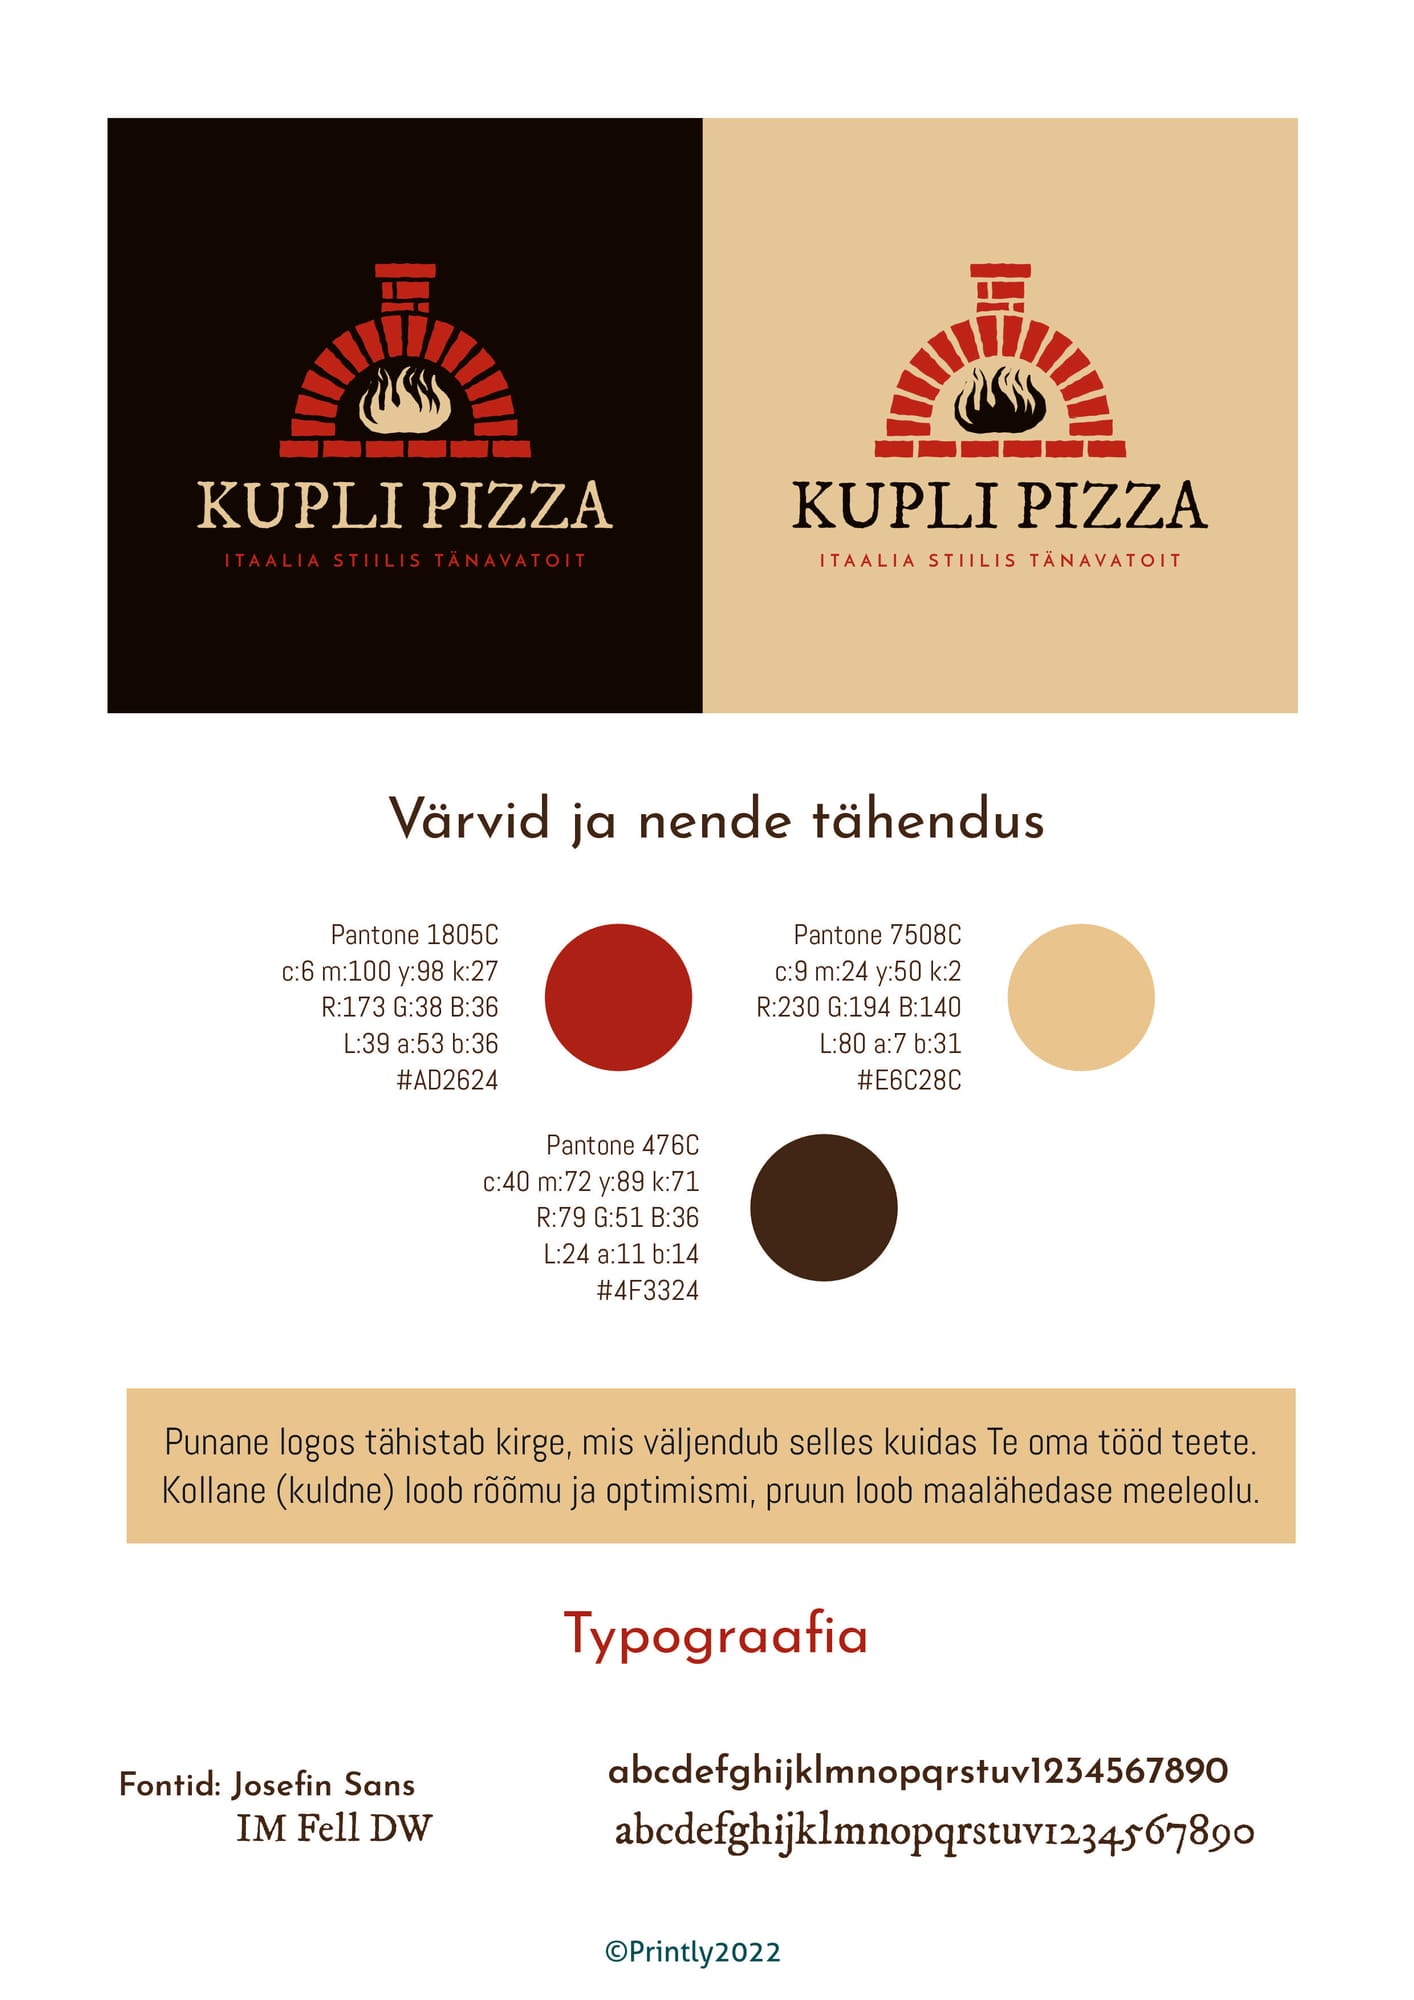 KupliPizza_logoSertifikaat_lk2.jpg